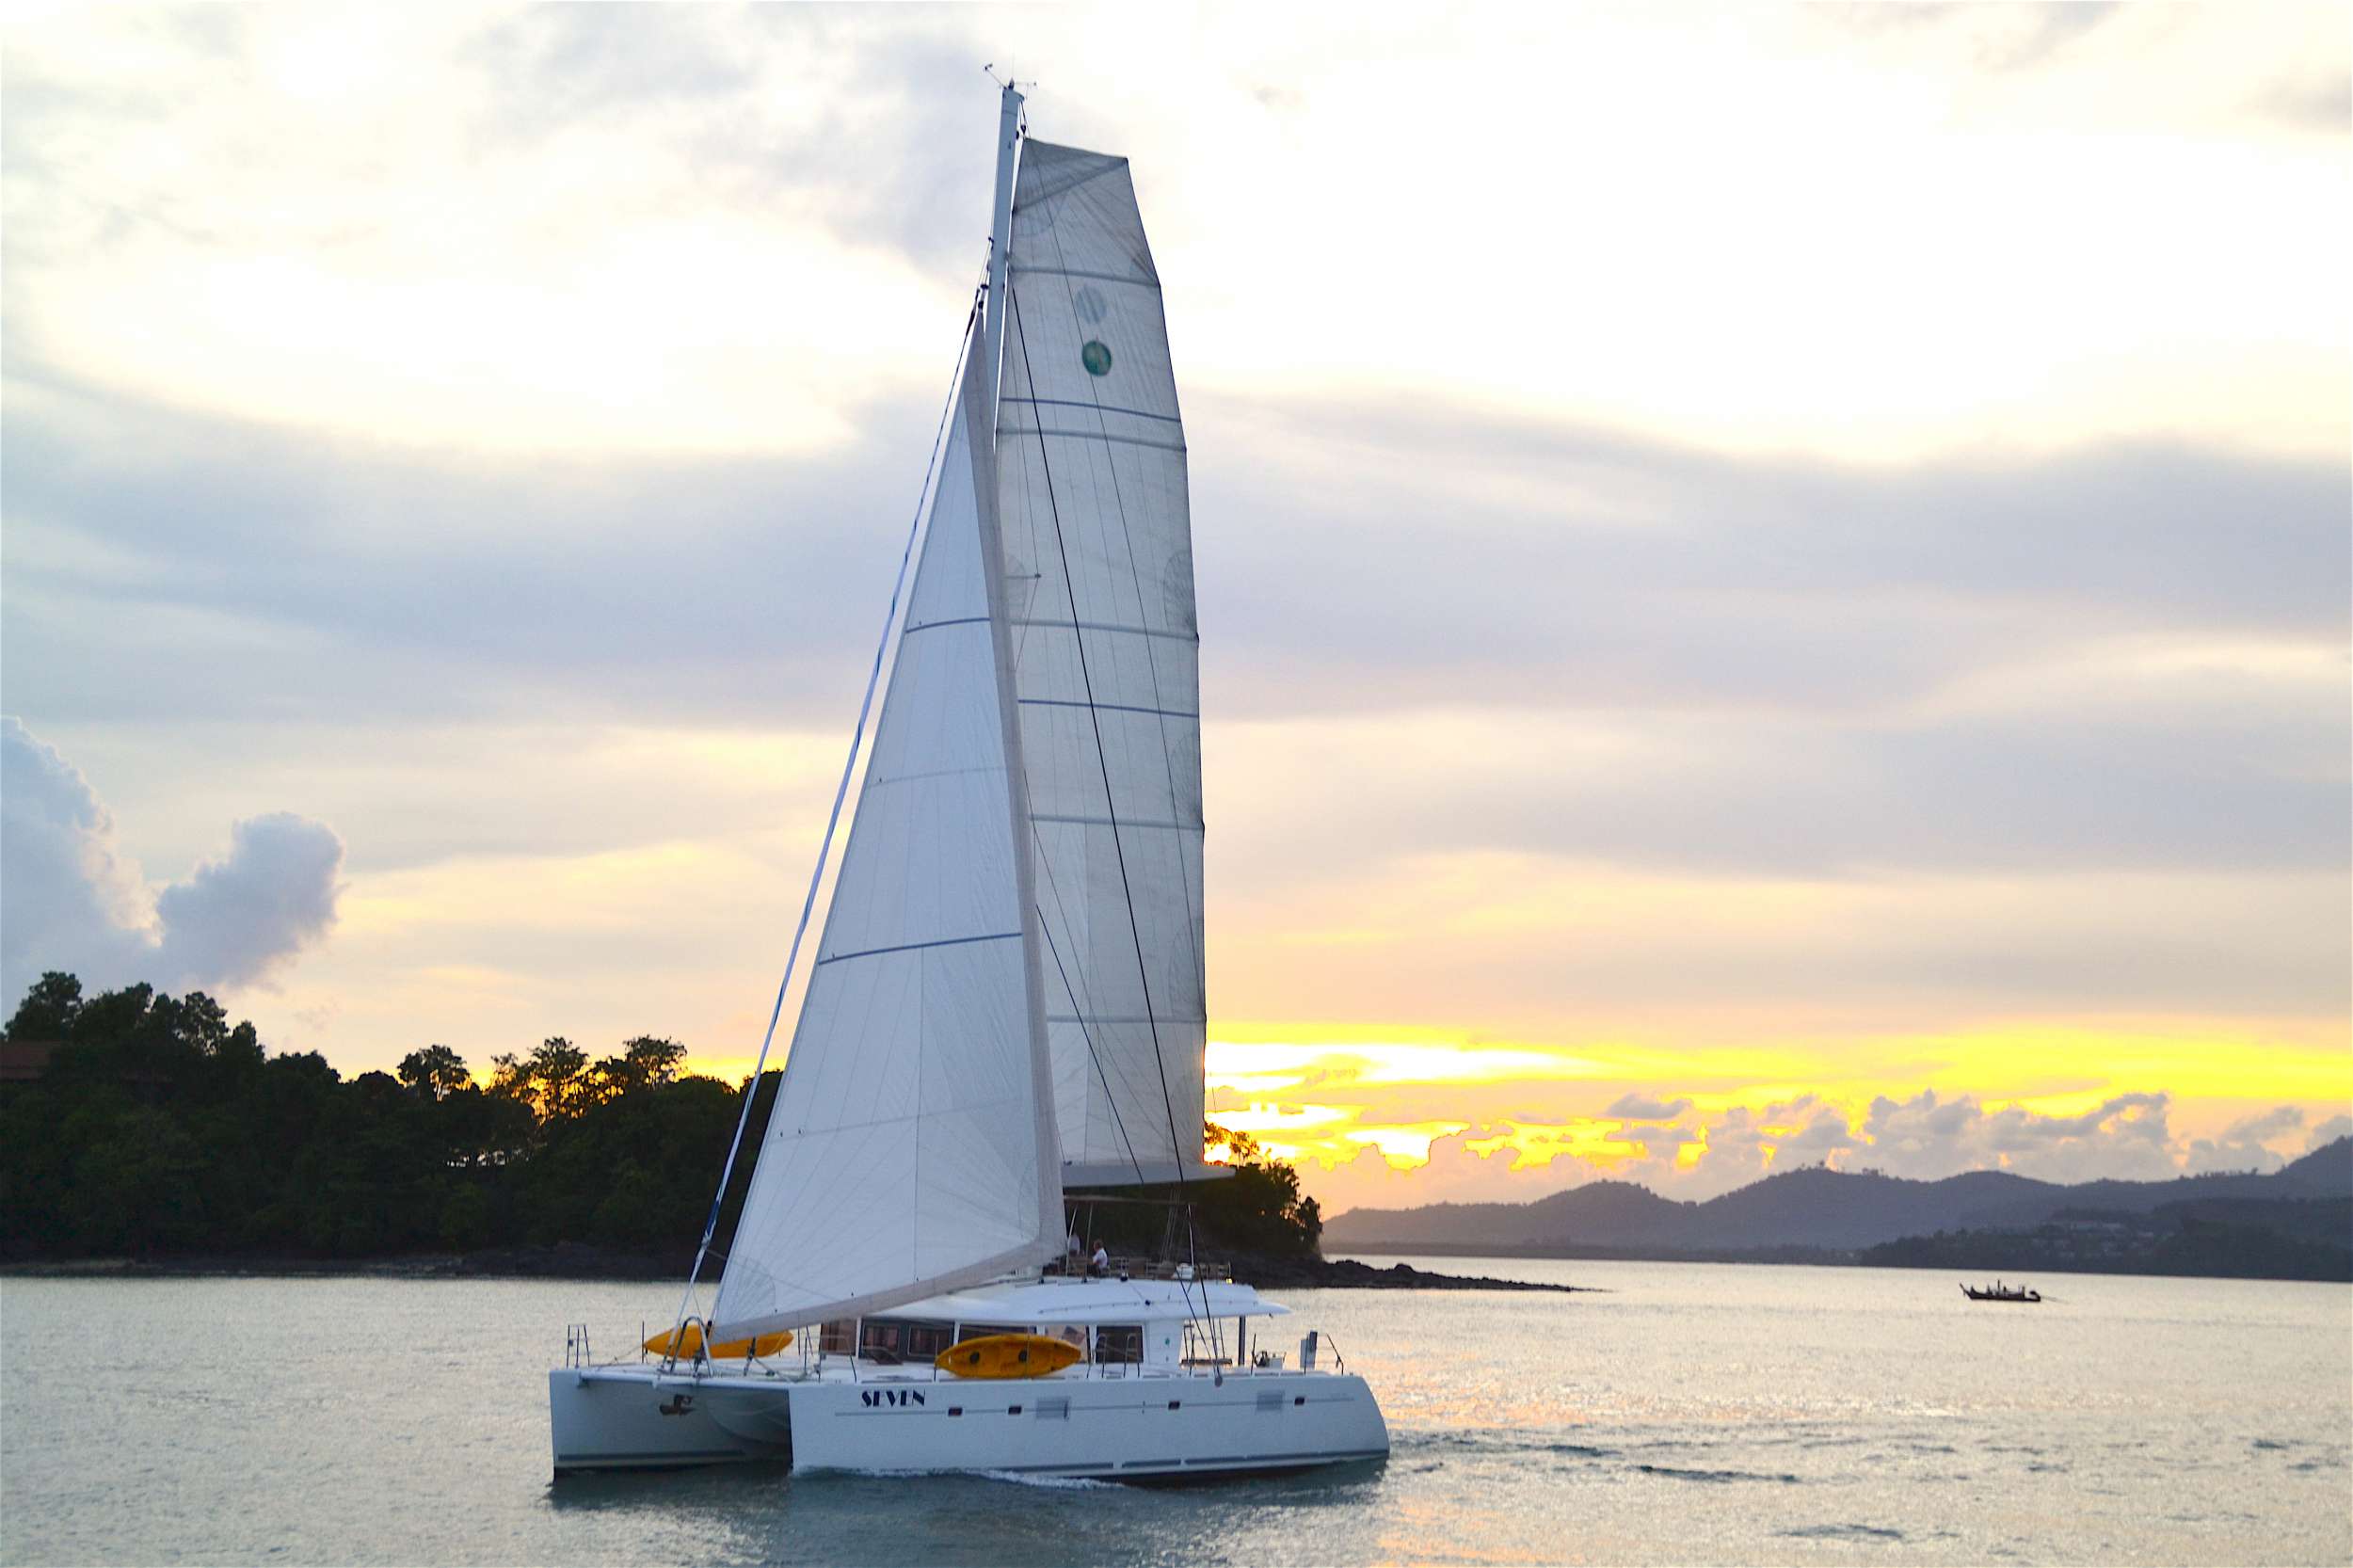 00SEVEN - Yacht Charter Koh Samui & Boat hire in SE Asia 2